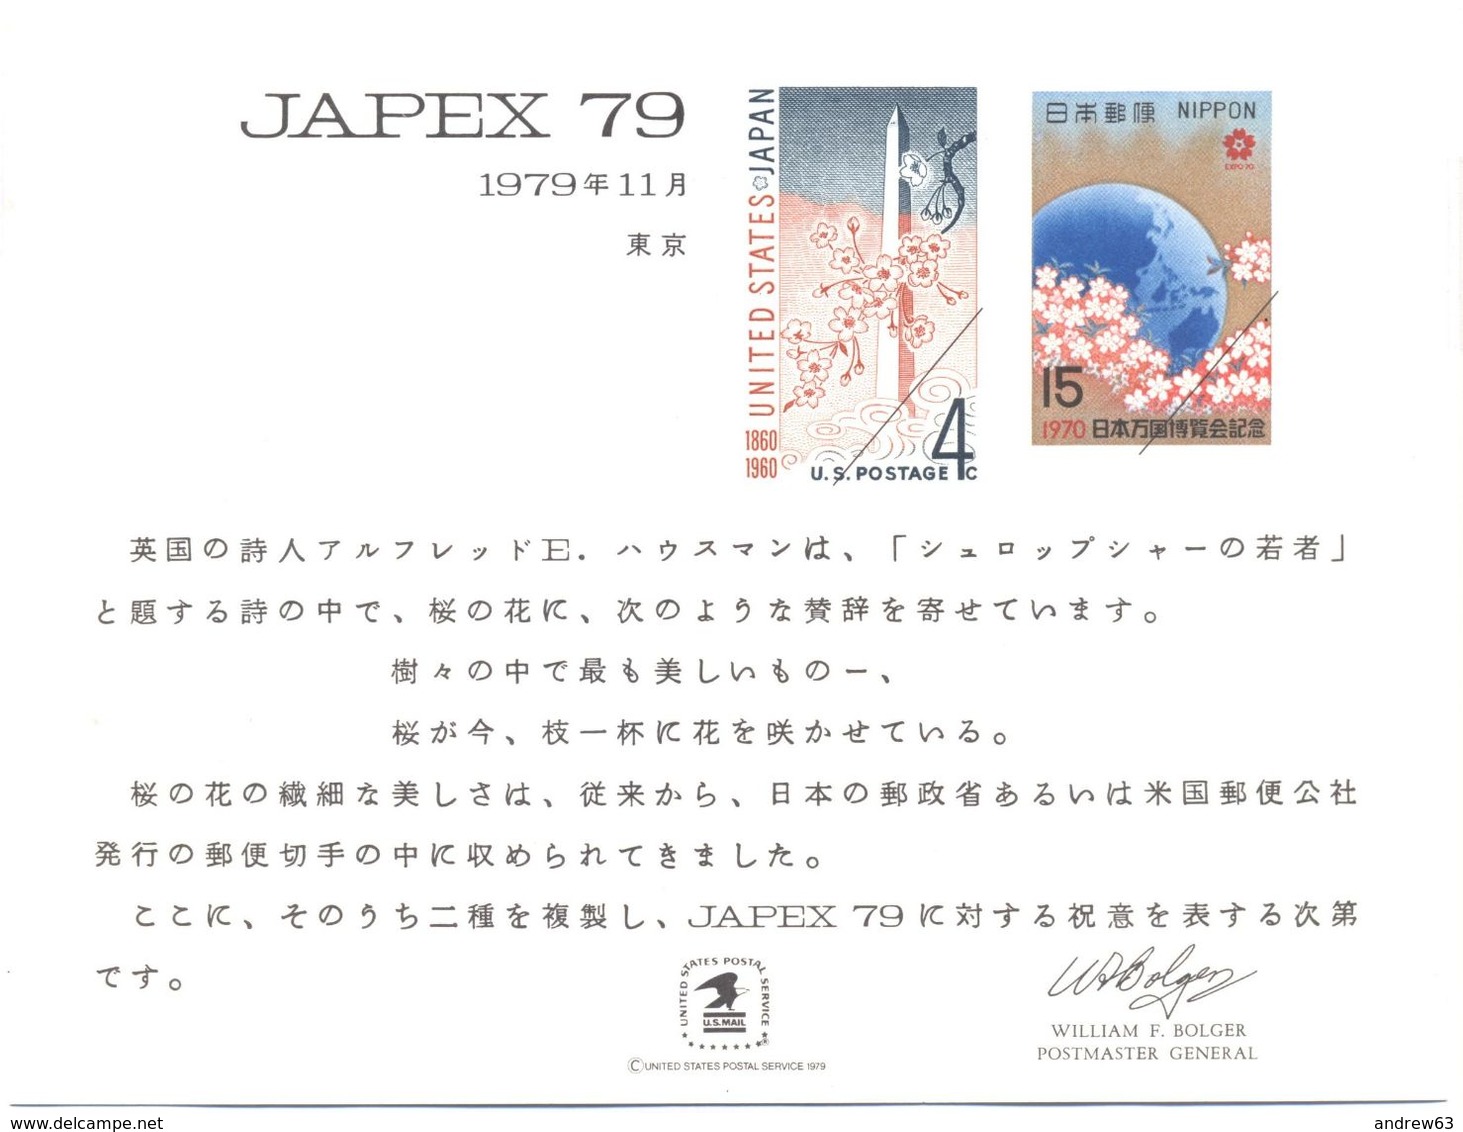 STATI UNITI - USA - 1979 - Mint Souvenir Card - Japex '79 - Souvenirs & Special Cards